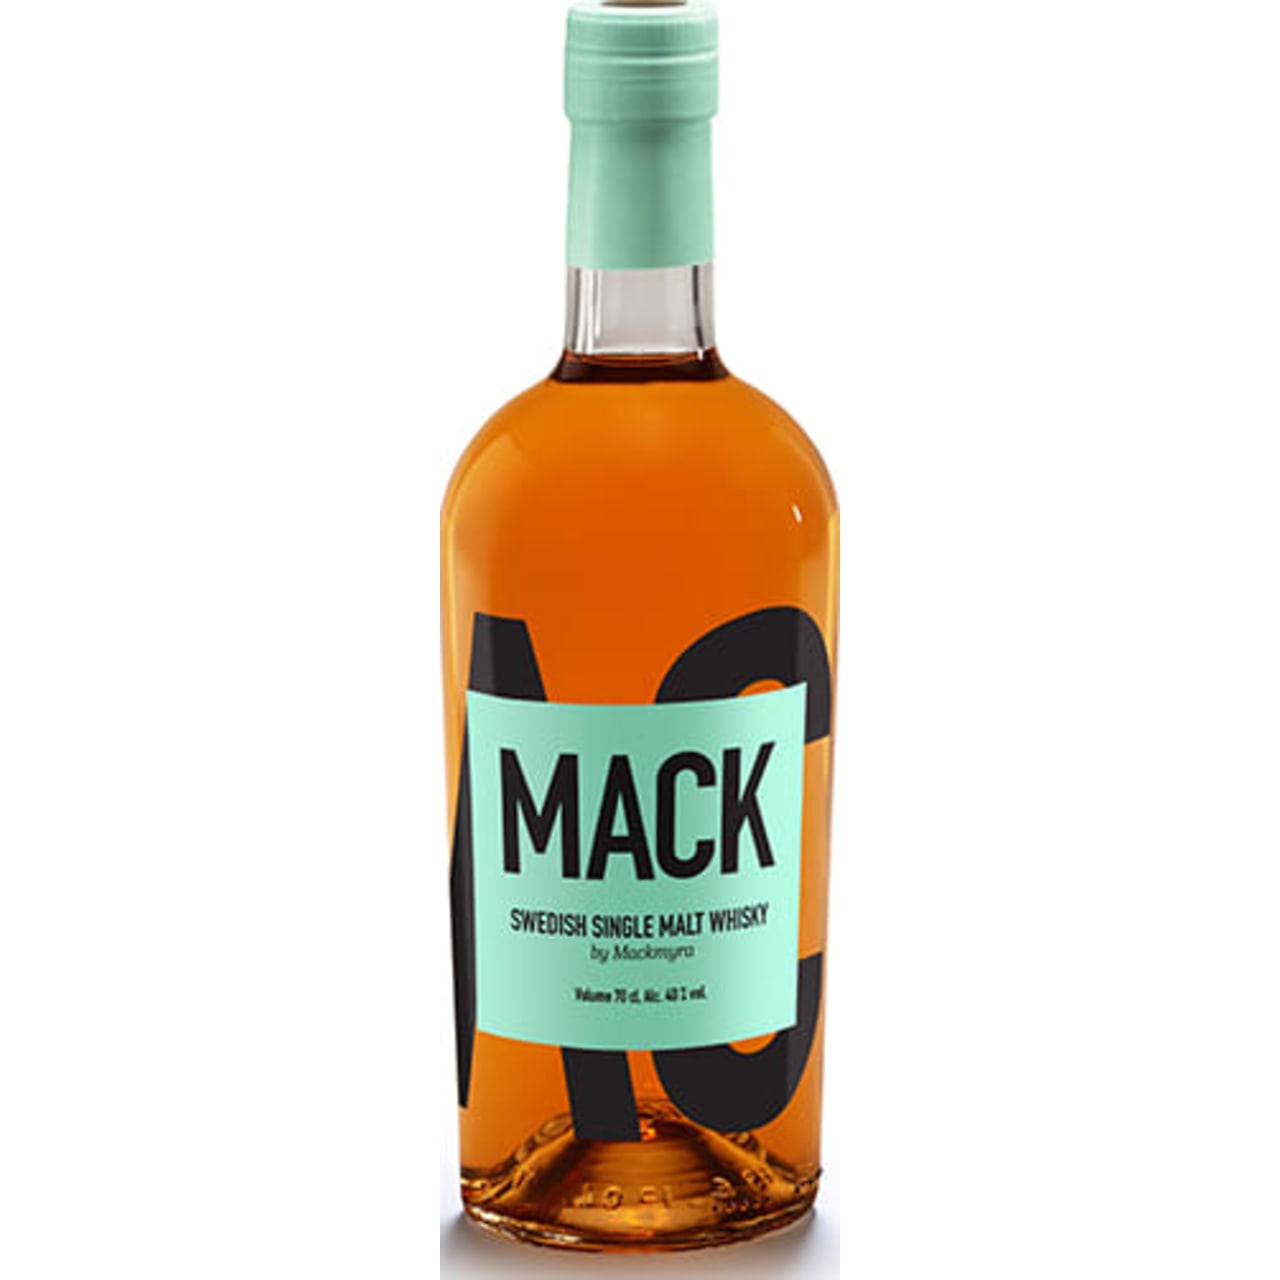 MACK by Mackmyra Single Malt Whisky